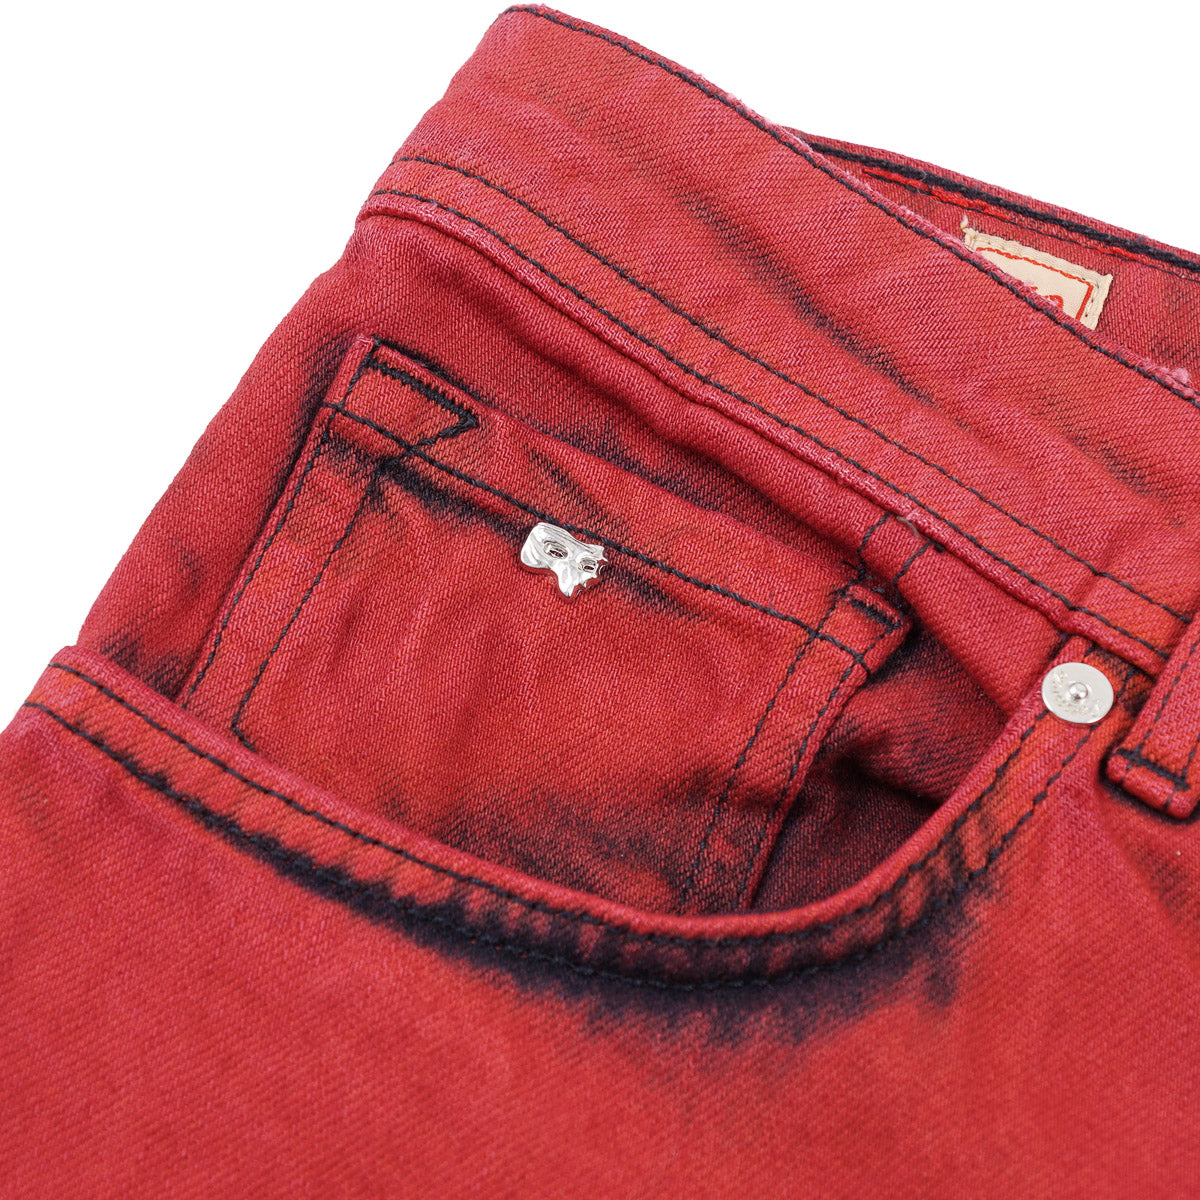 Marco Pescarolo Overdyed Denim Jeans - Top Shelf Apparel